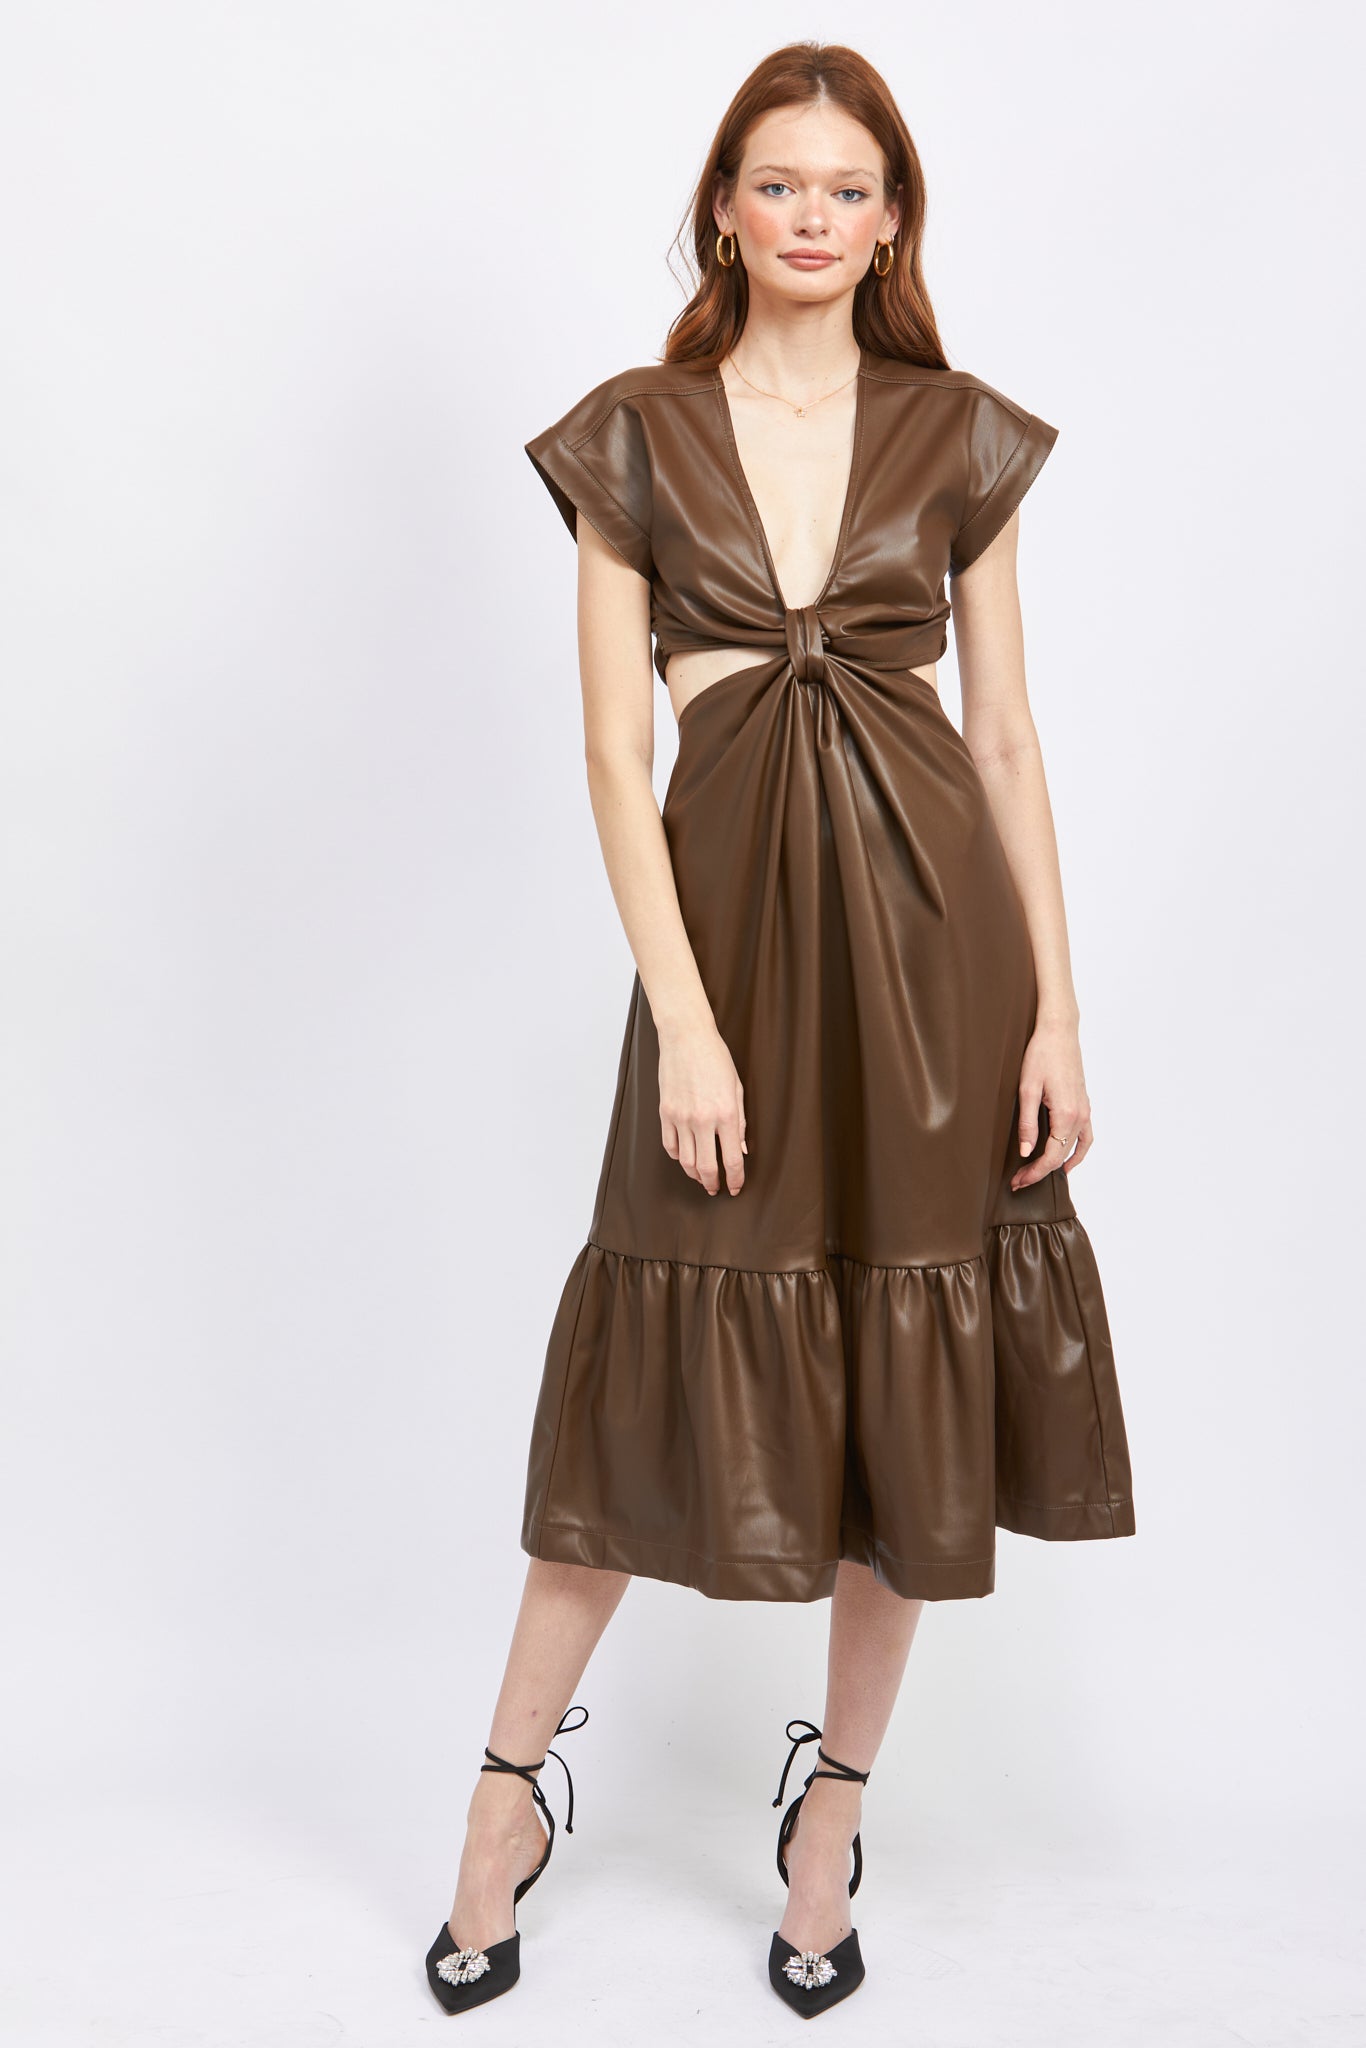 Lana Cut Out Midi Dress in Dark Brown